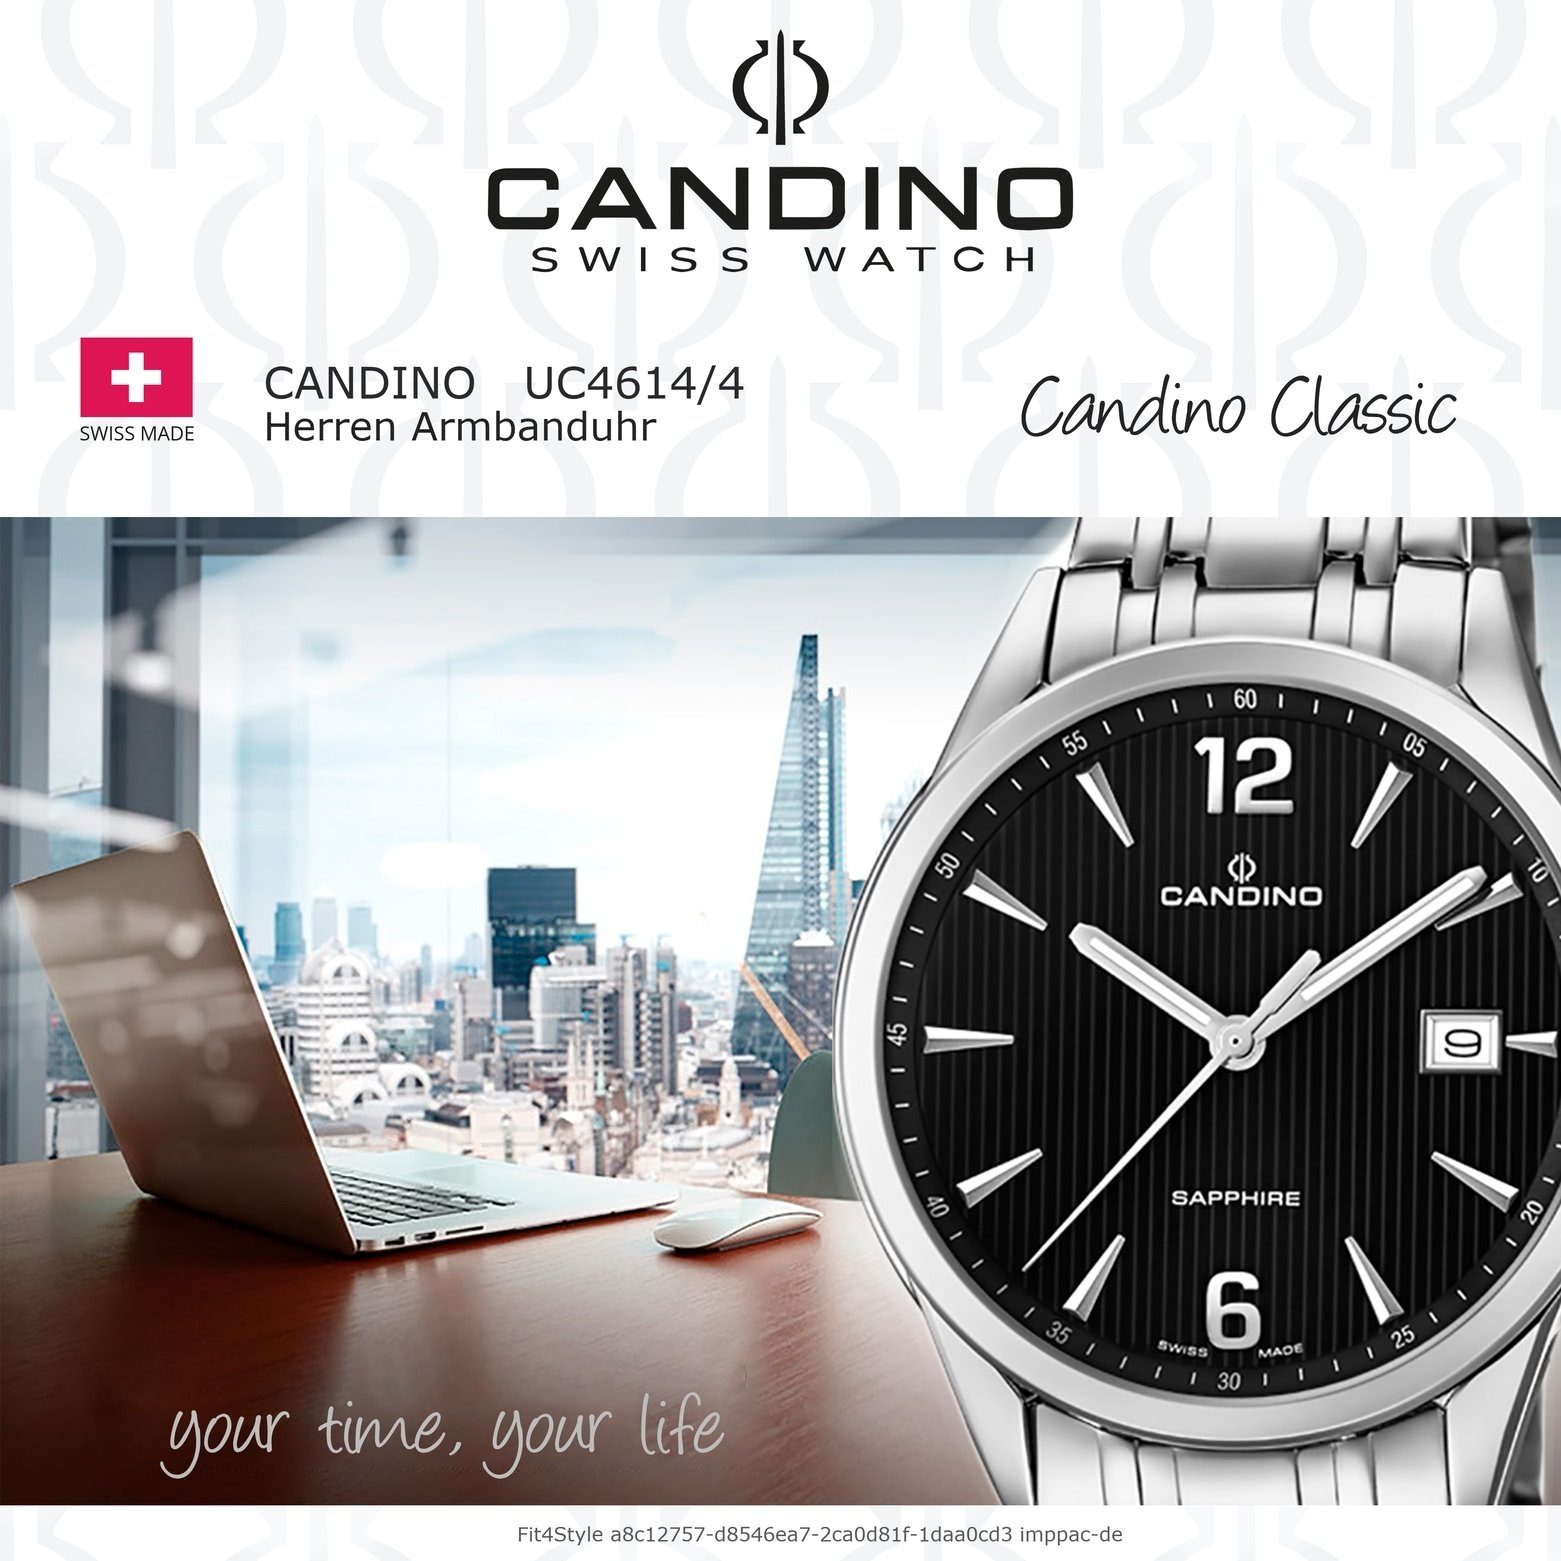 Uhr Armbanduhr C4614/4, Herren Candino Candino Edelstahlarmband Analog rund, Elegant Quarzuhr Herren silber,